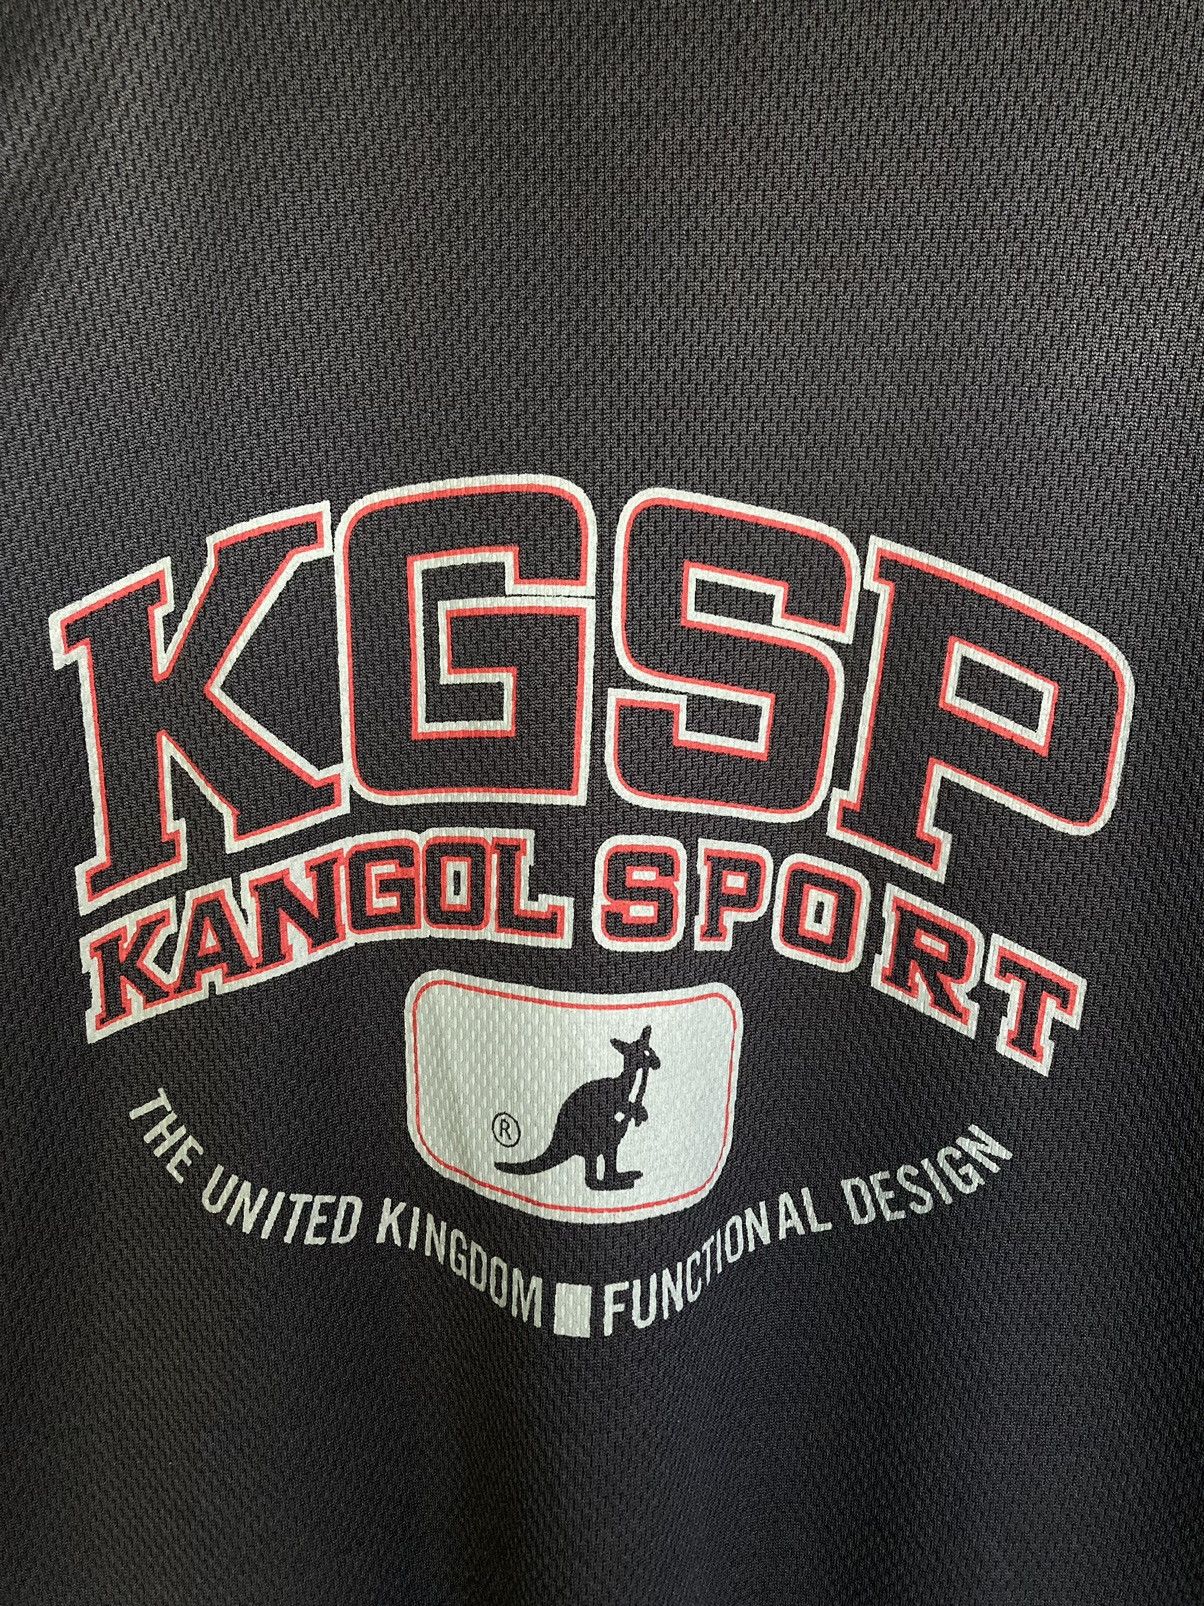 Vintage Kangol Sport Jersey - 5